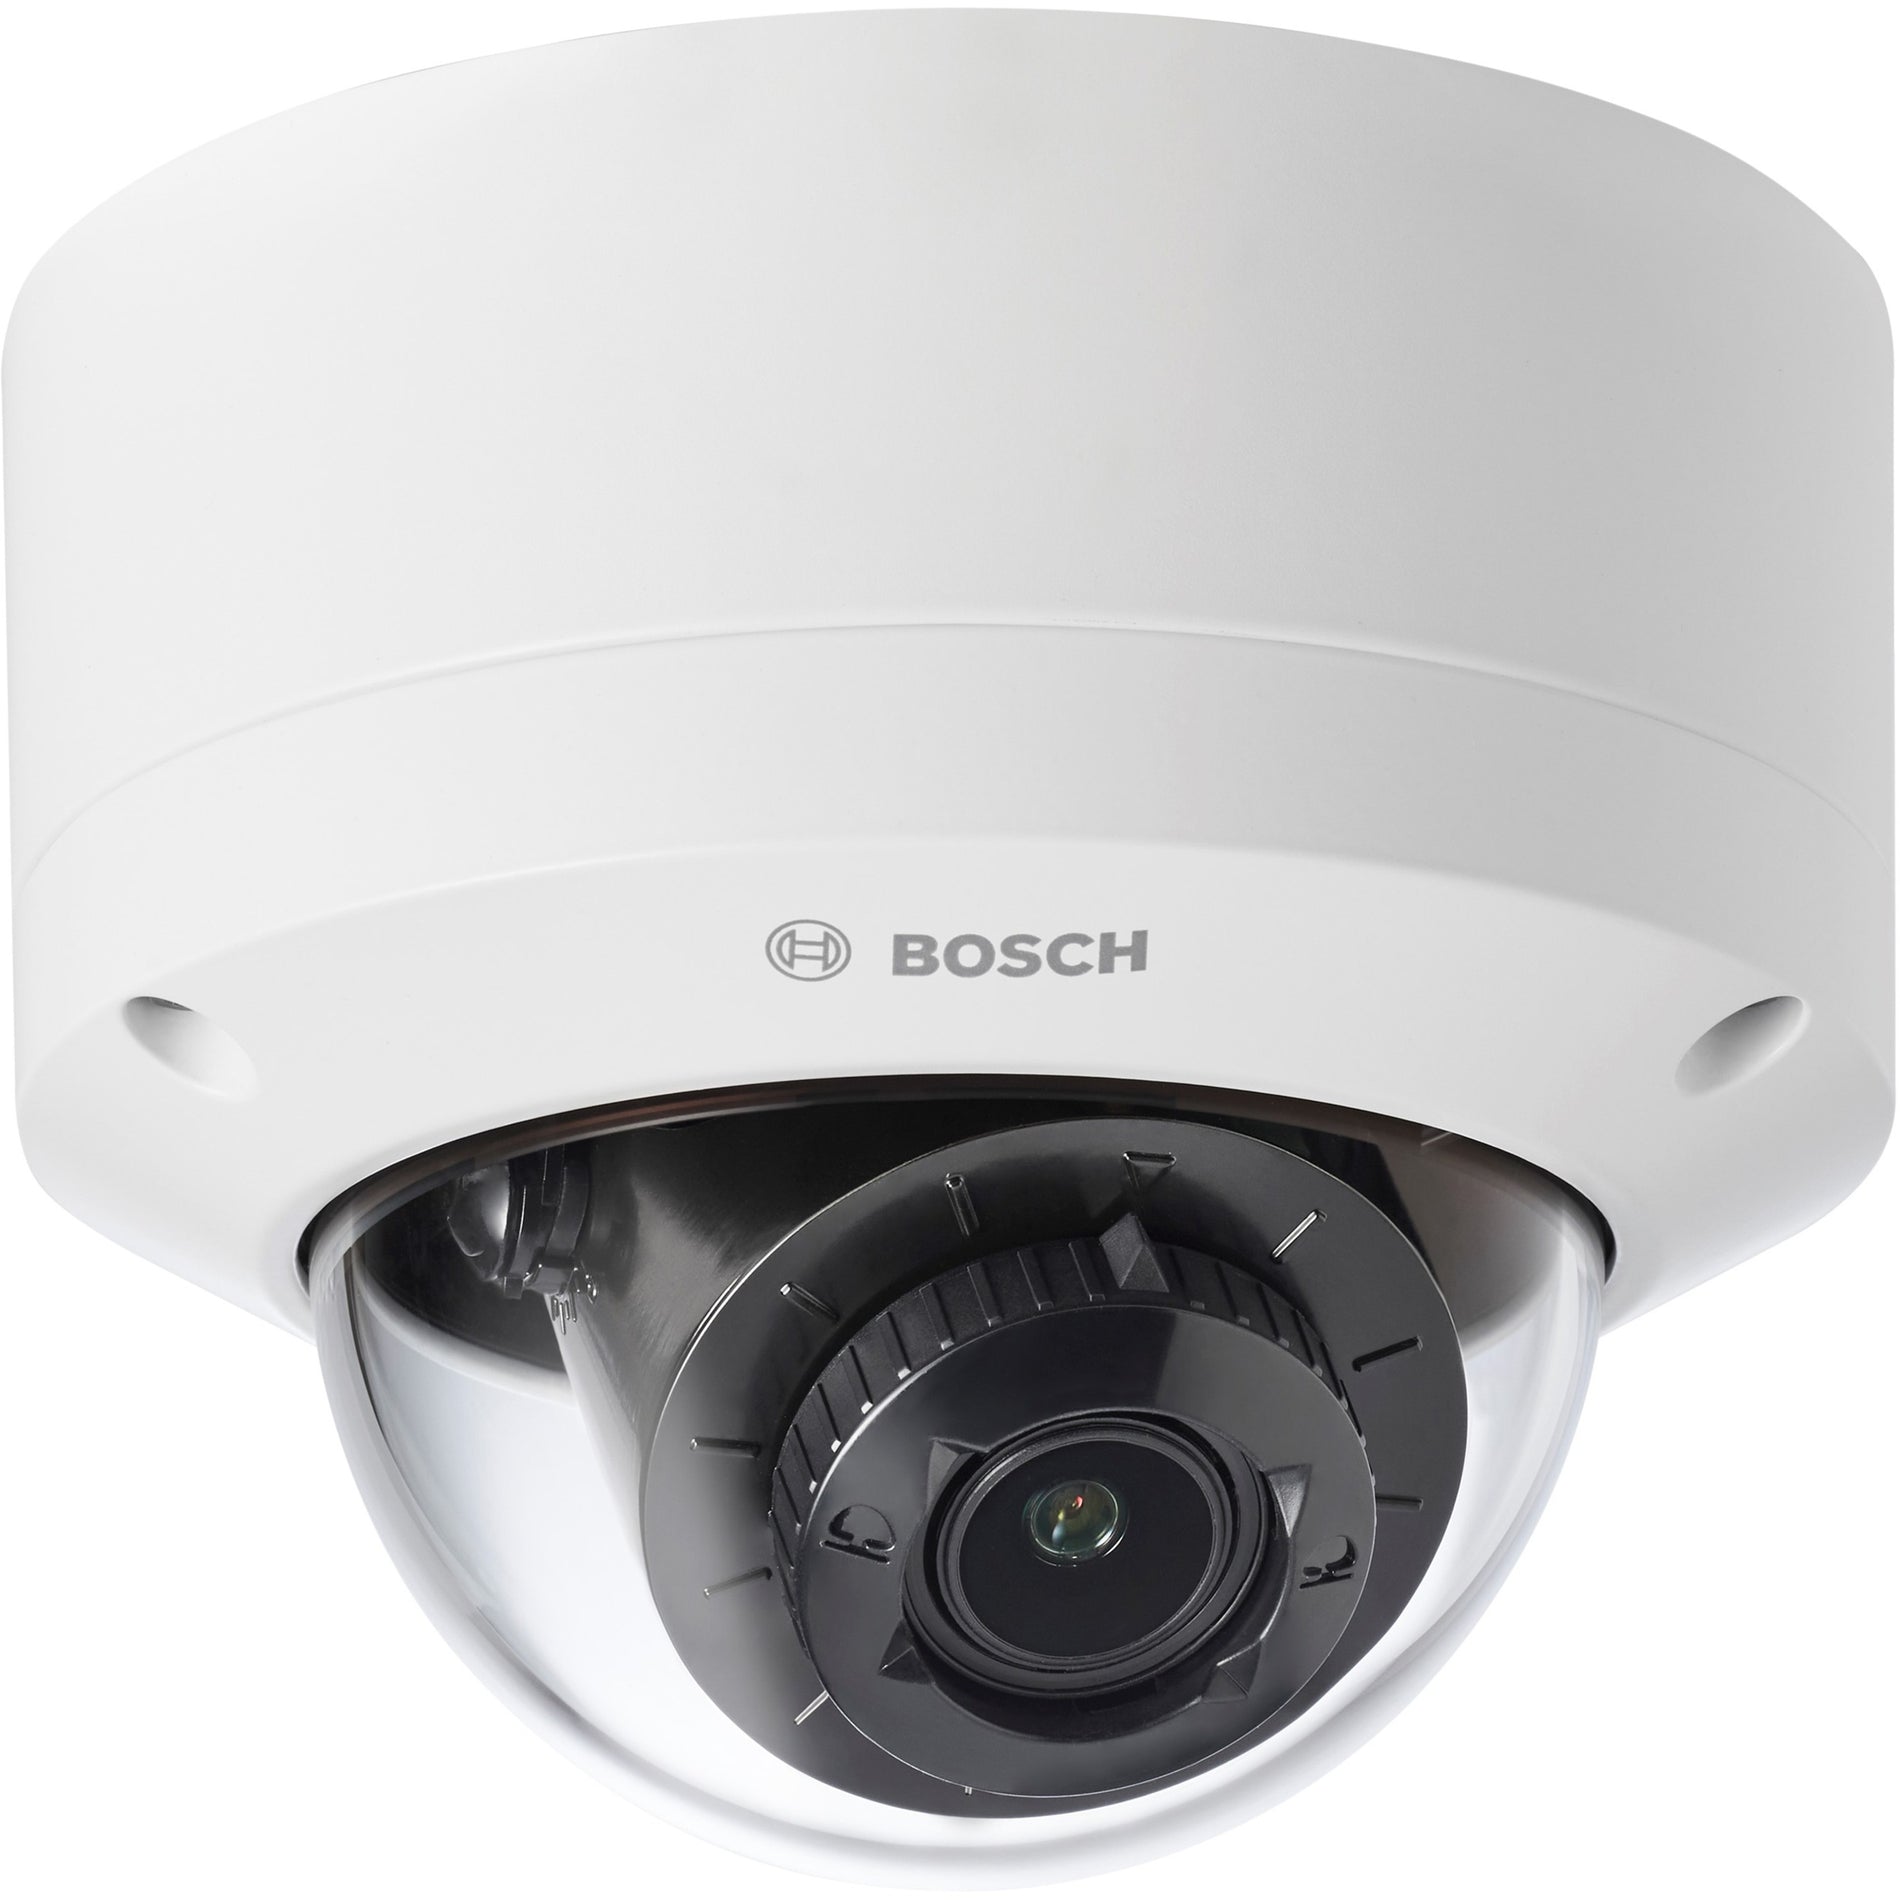 Bosch 2 Megapixel Surveillance Camera - Color Dome [Discontinued]